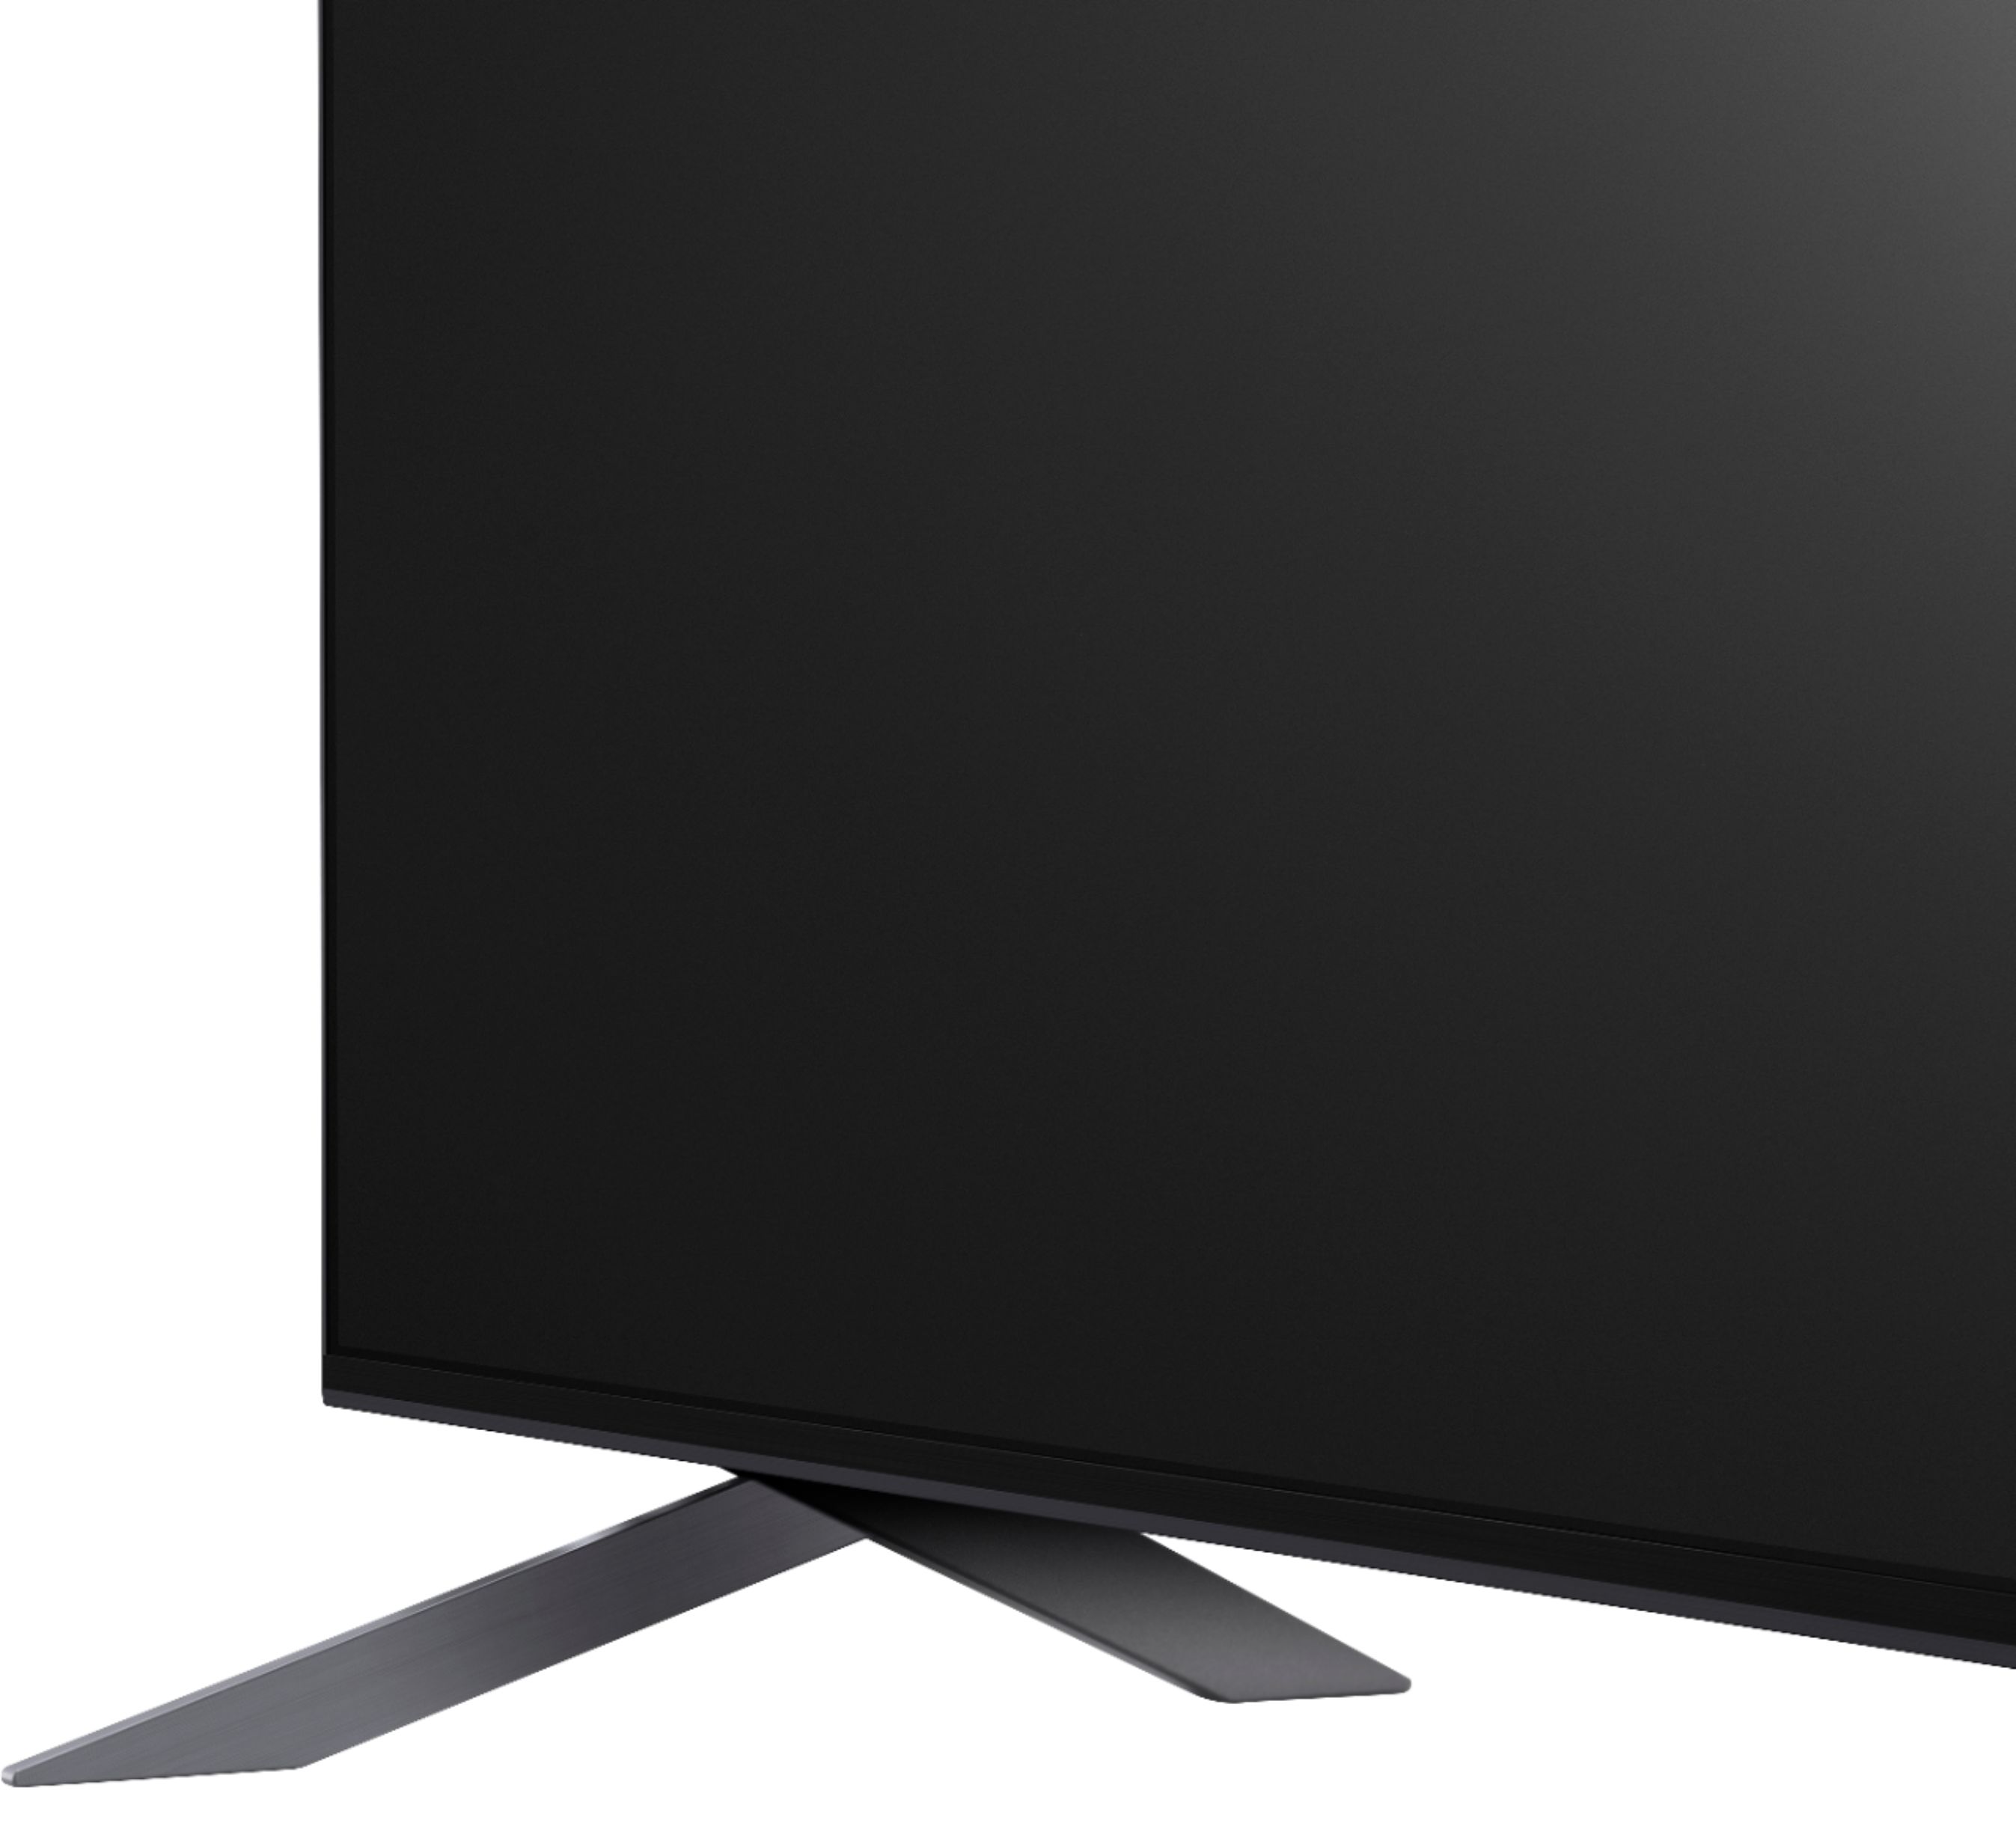 Televisor LG Nanocell 55 Pulgadas 4k Smart Tv 55nano80spa